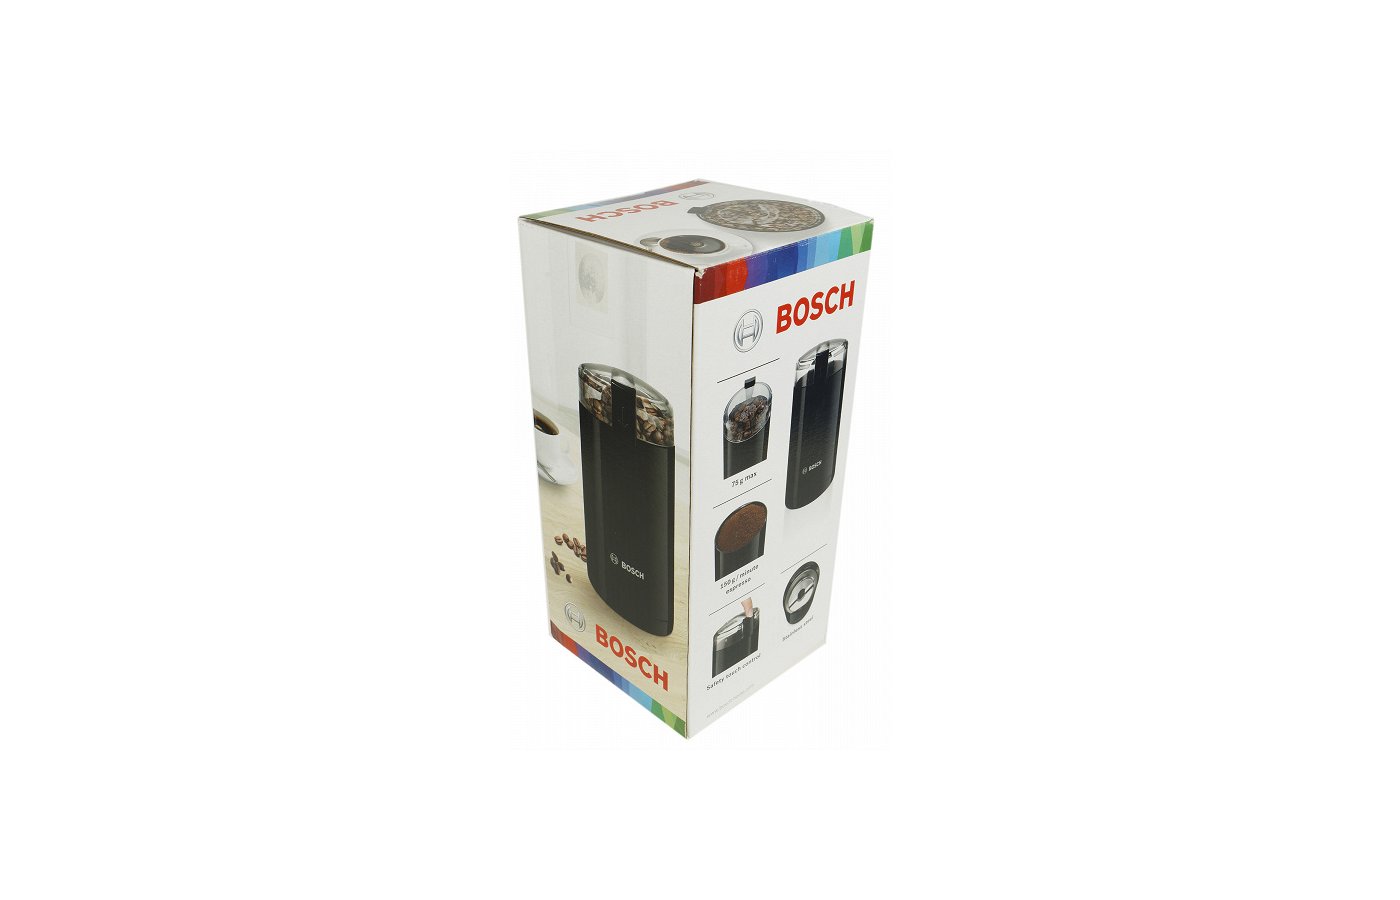 Bosch tsm6a013b. Кофемолка электрическая Bosch tsm6a013b. Кофемолка Bosch tsm6a013b. Bosch tsm6a013b черный.